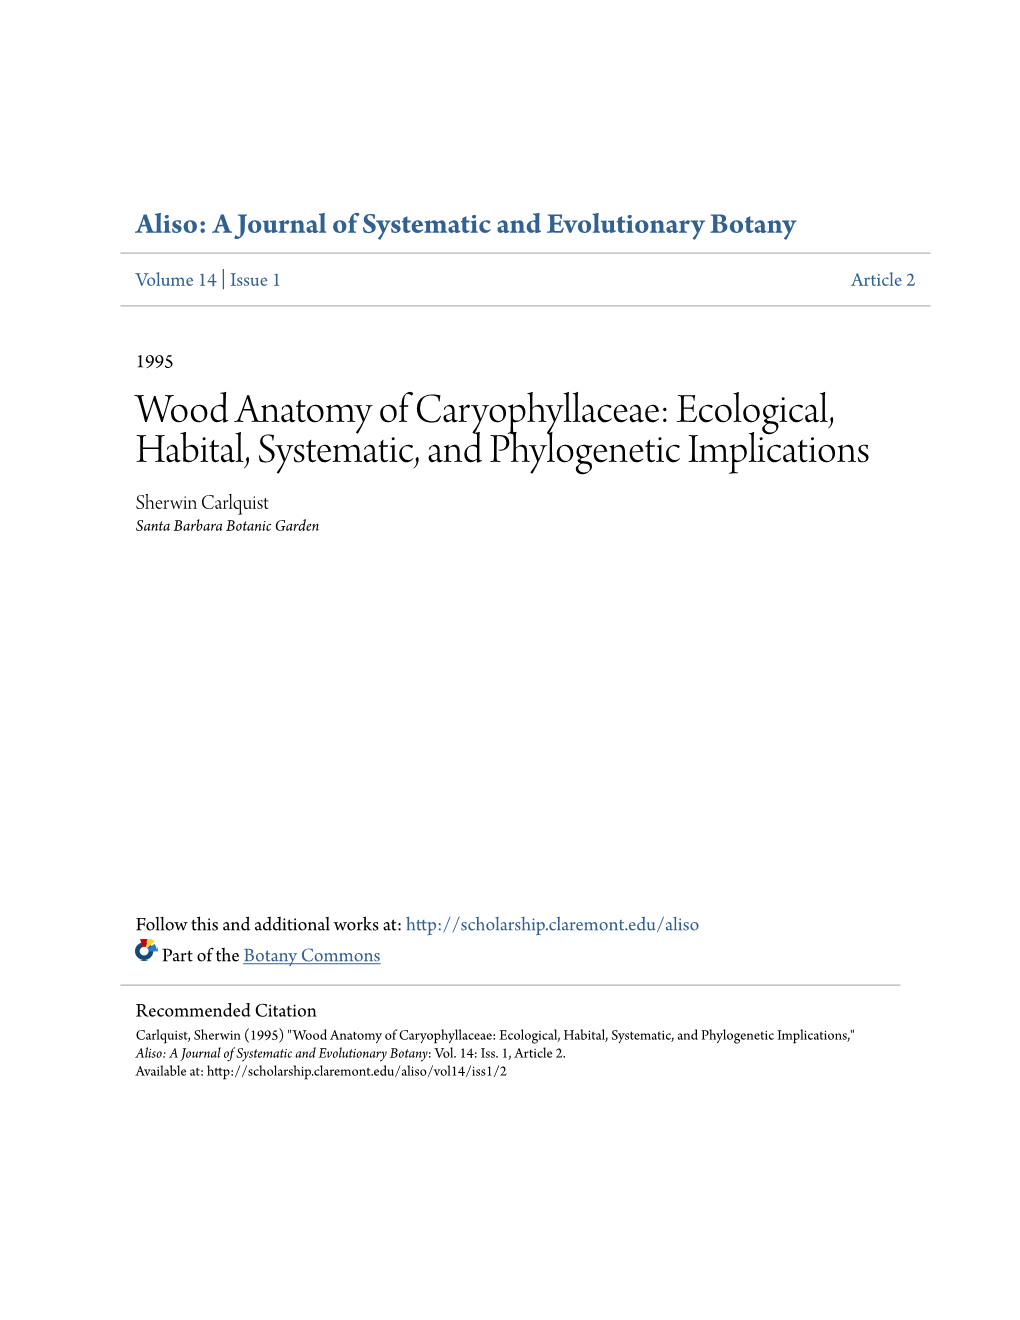 Wood Anatomy of Caryophyllaceae: Ecological, Habital, Systematic, and Phylogenetic Implications Sherwin Carlquist Santa Barbara Botanic Garden